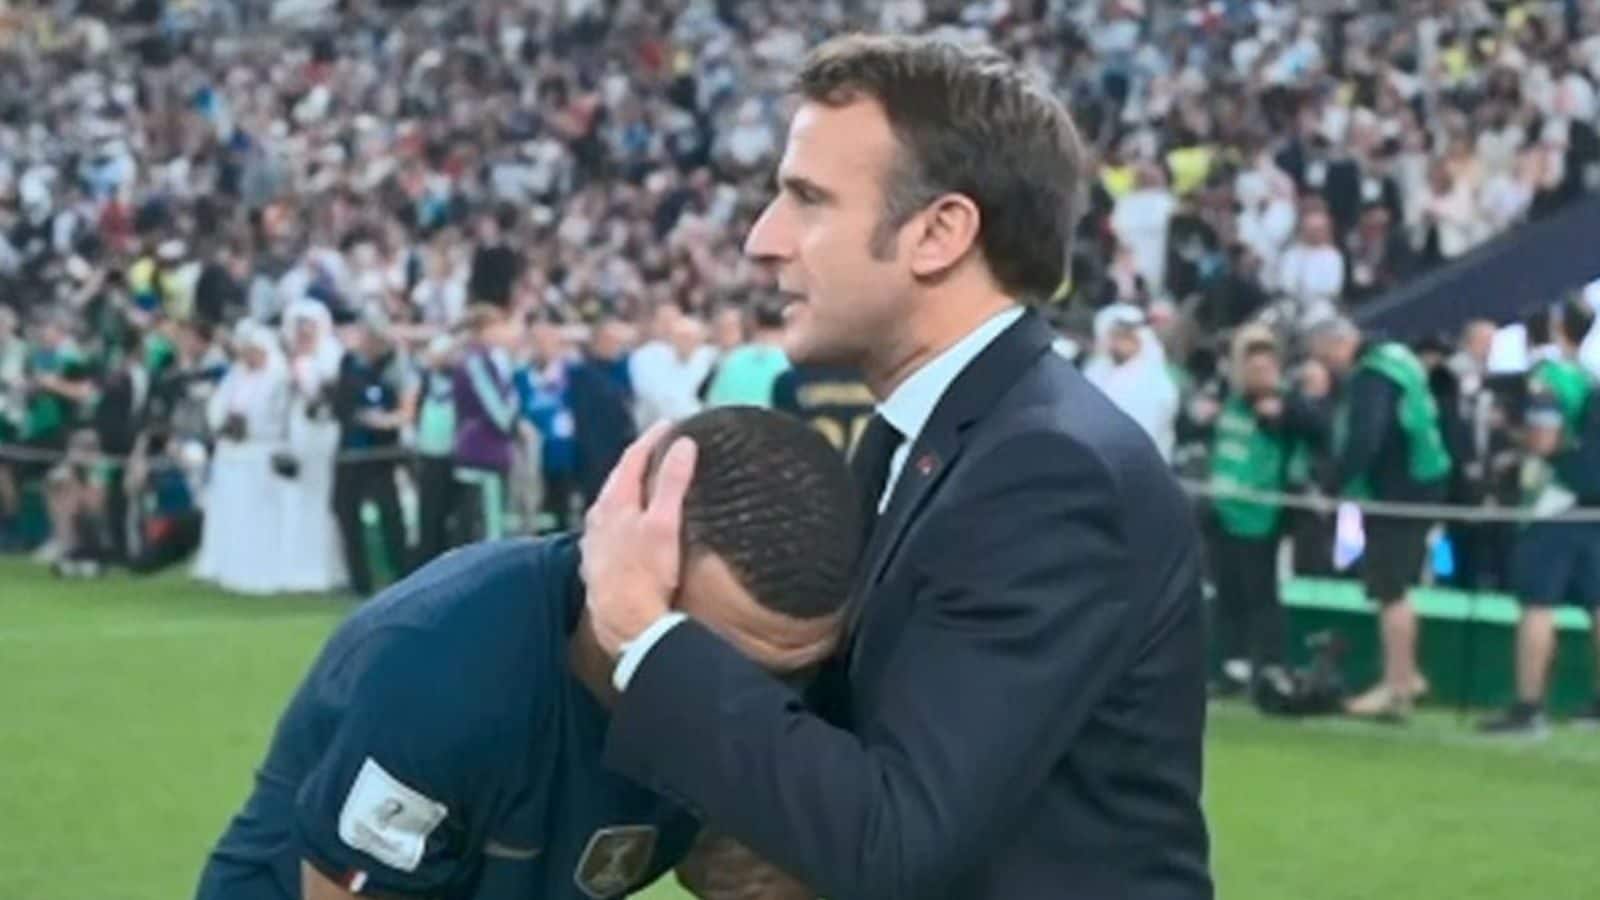 Very sad' French President Emmanuel Macron consoles team, then